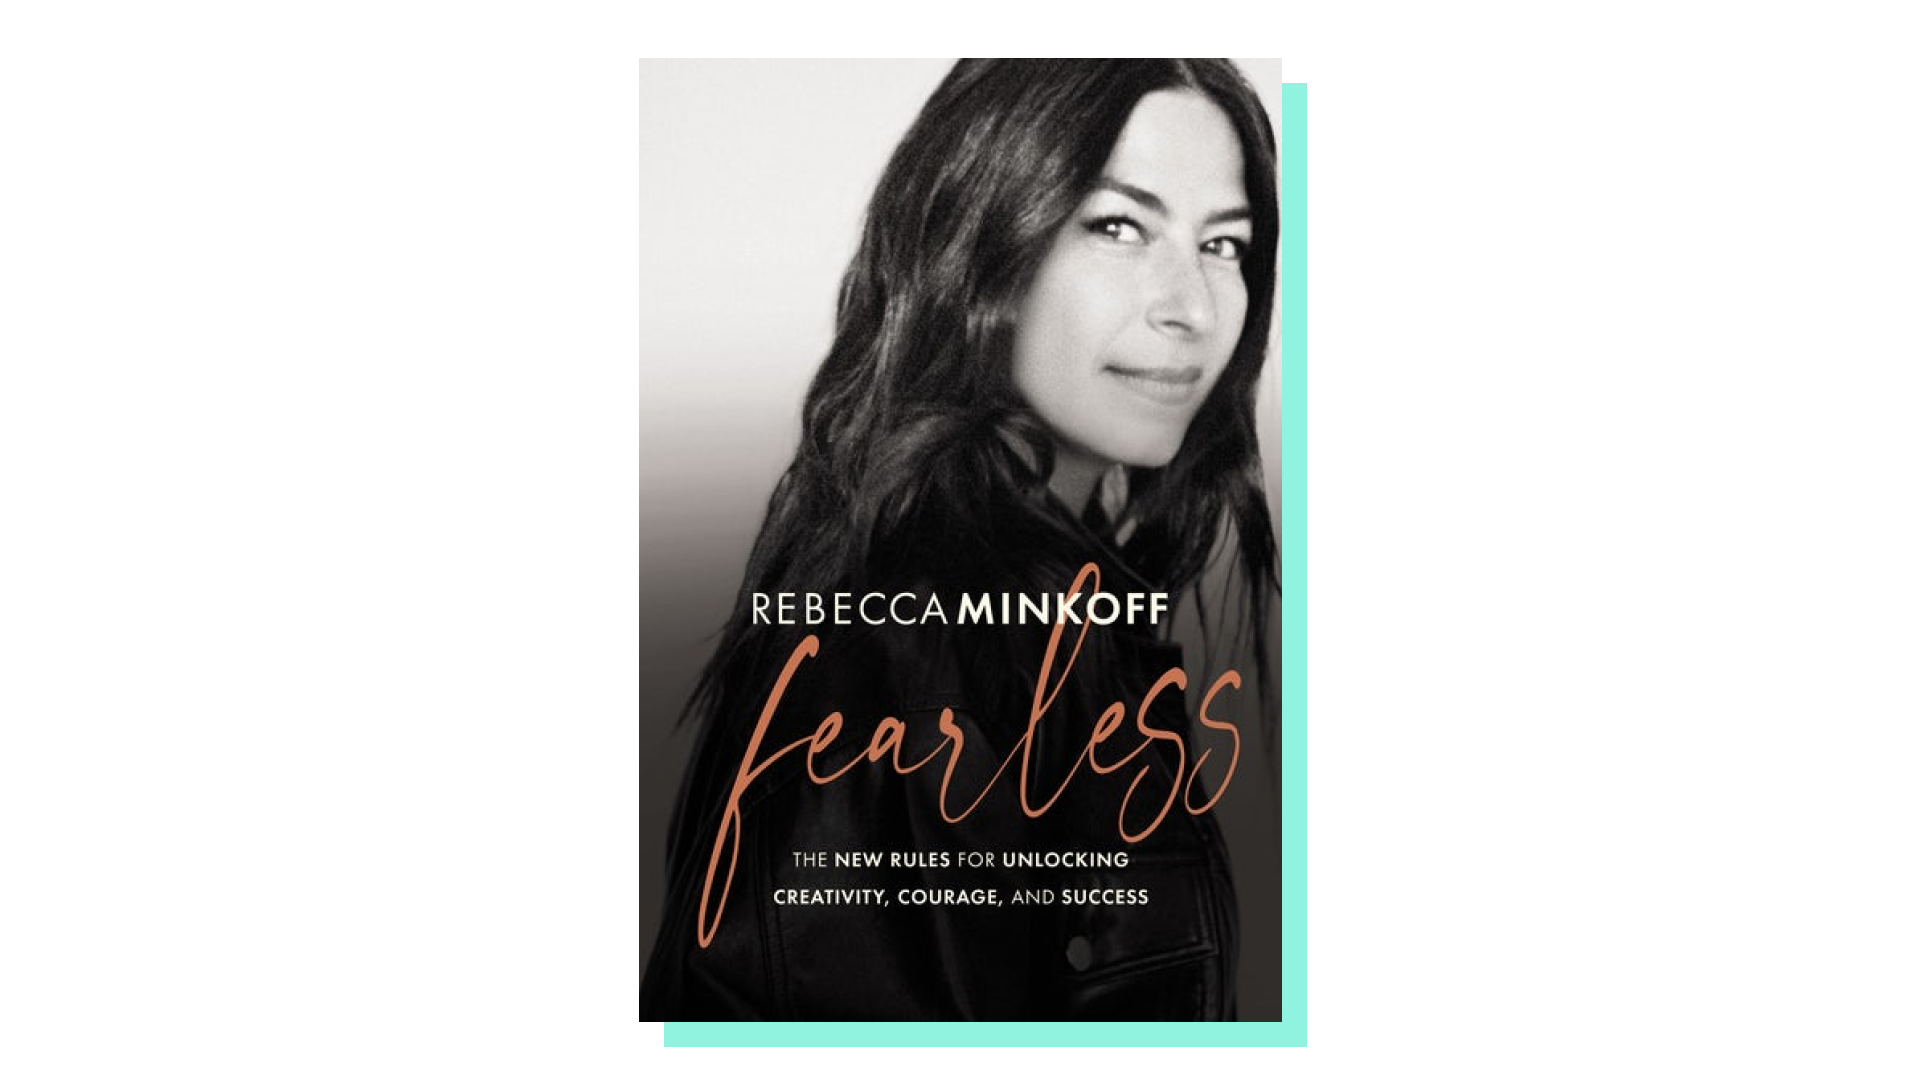 Rebecca Minkoff’s “Fearless”